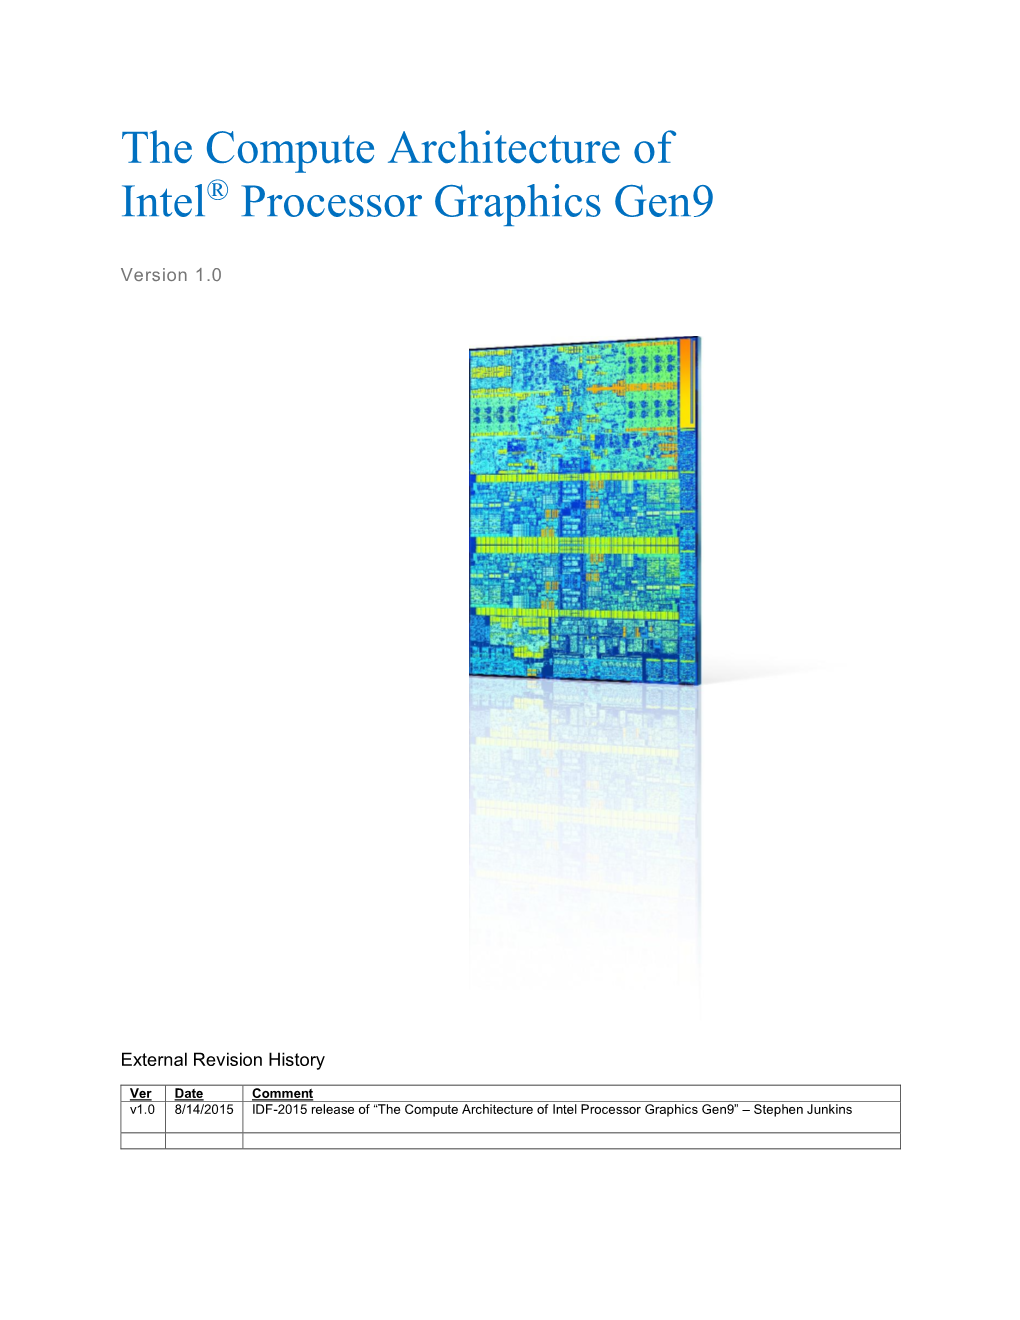 The Compute Architecture of Intel Processor Graphics Gen9” – Stephen Junkins